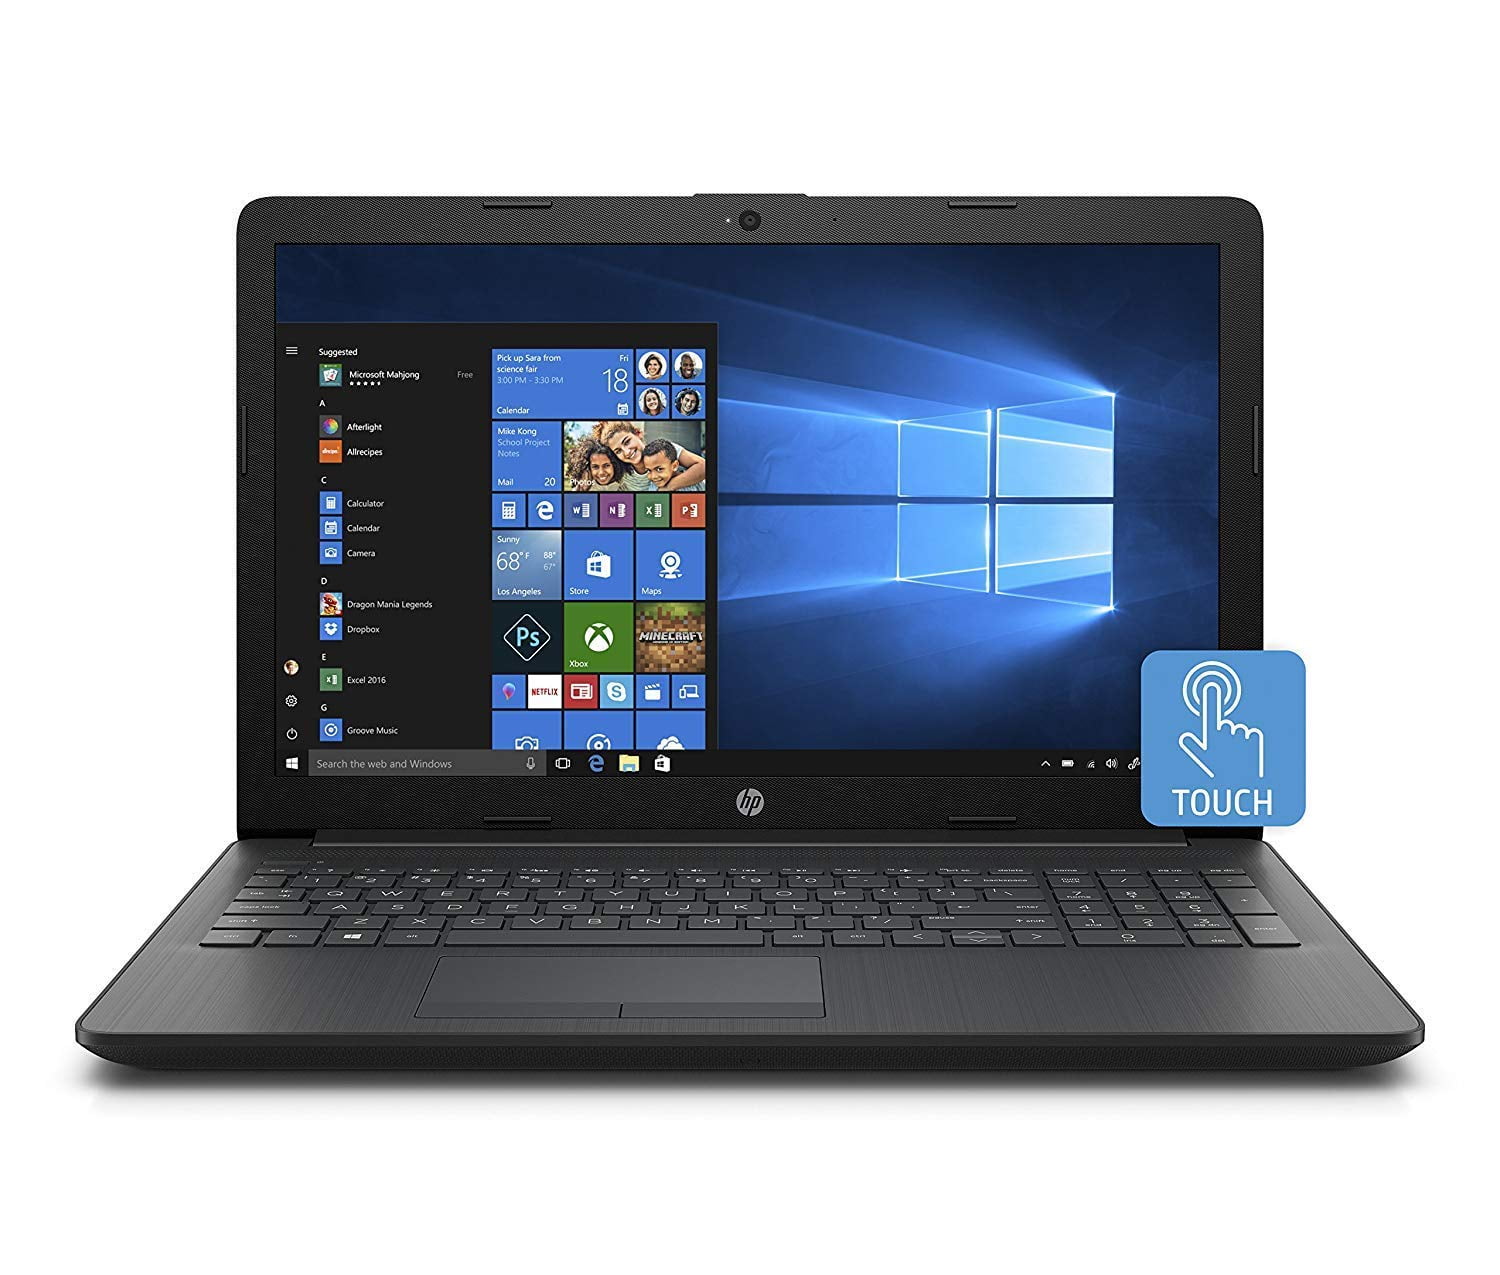 HP 15.6" High Performance Touchscreen Laptop PC Intel i3-7100u Dual